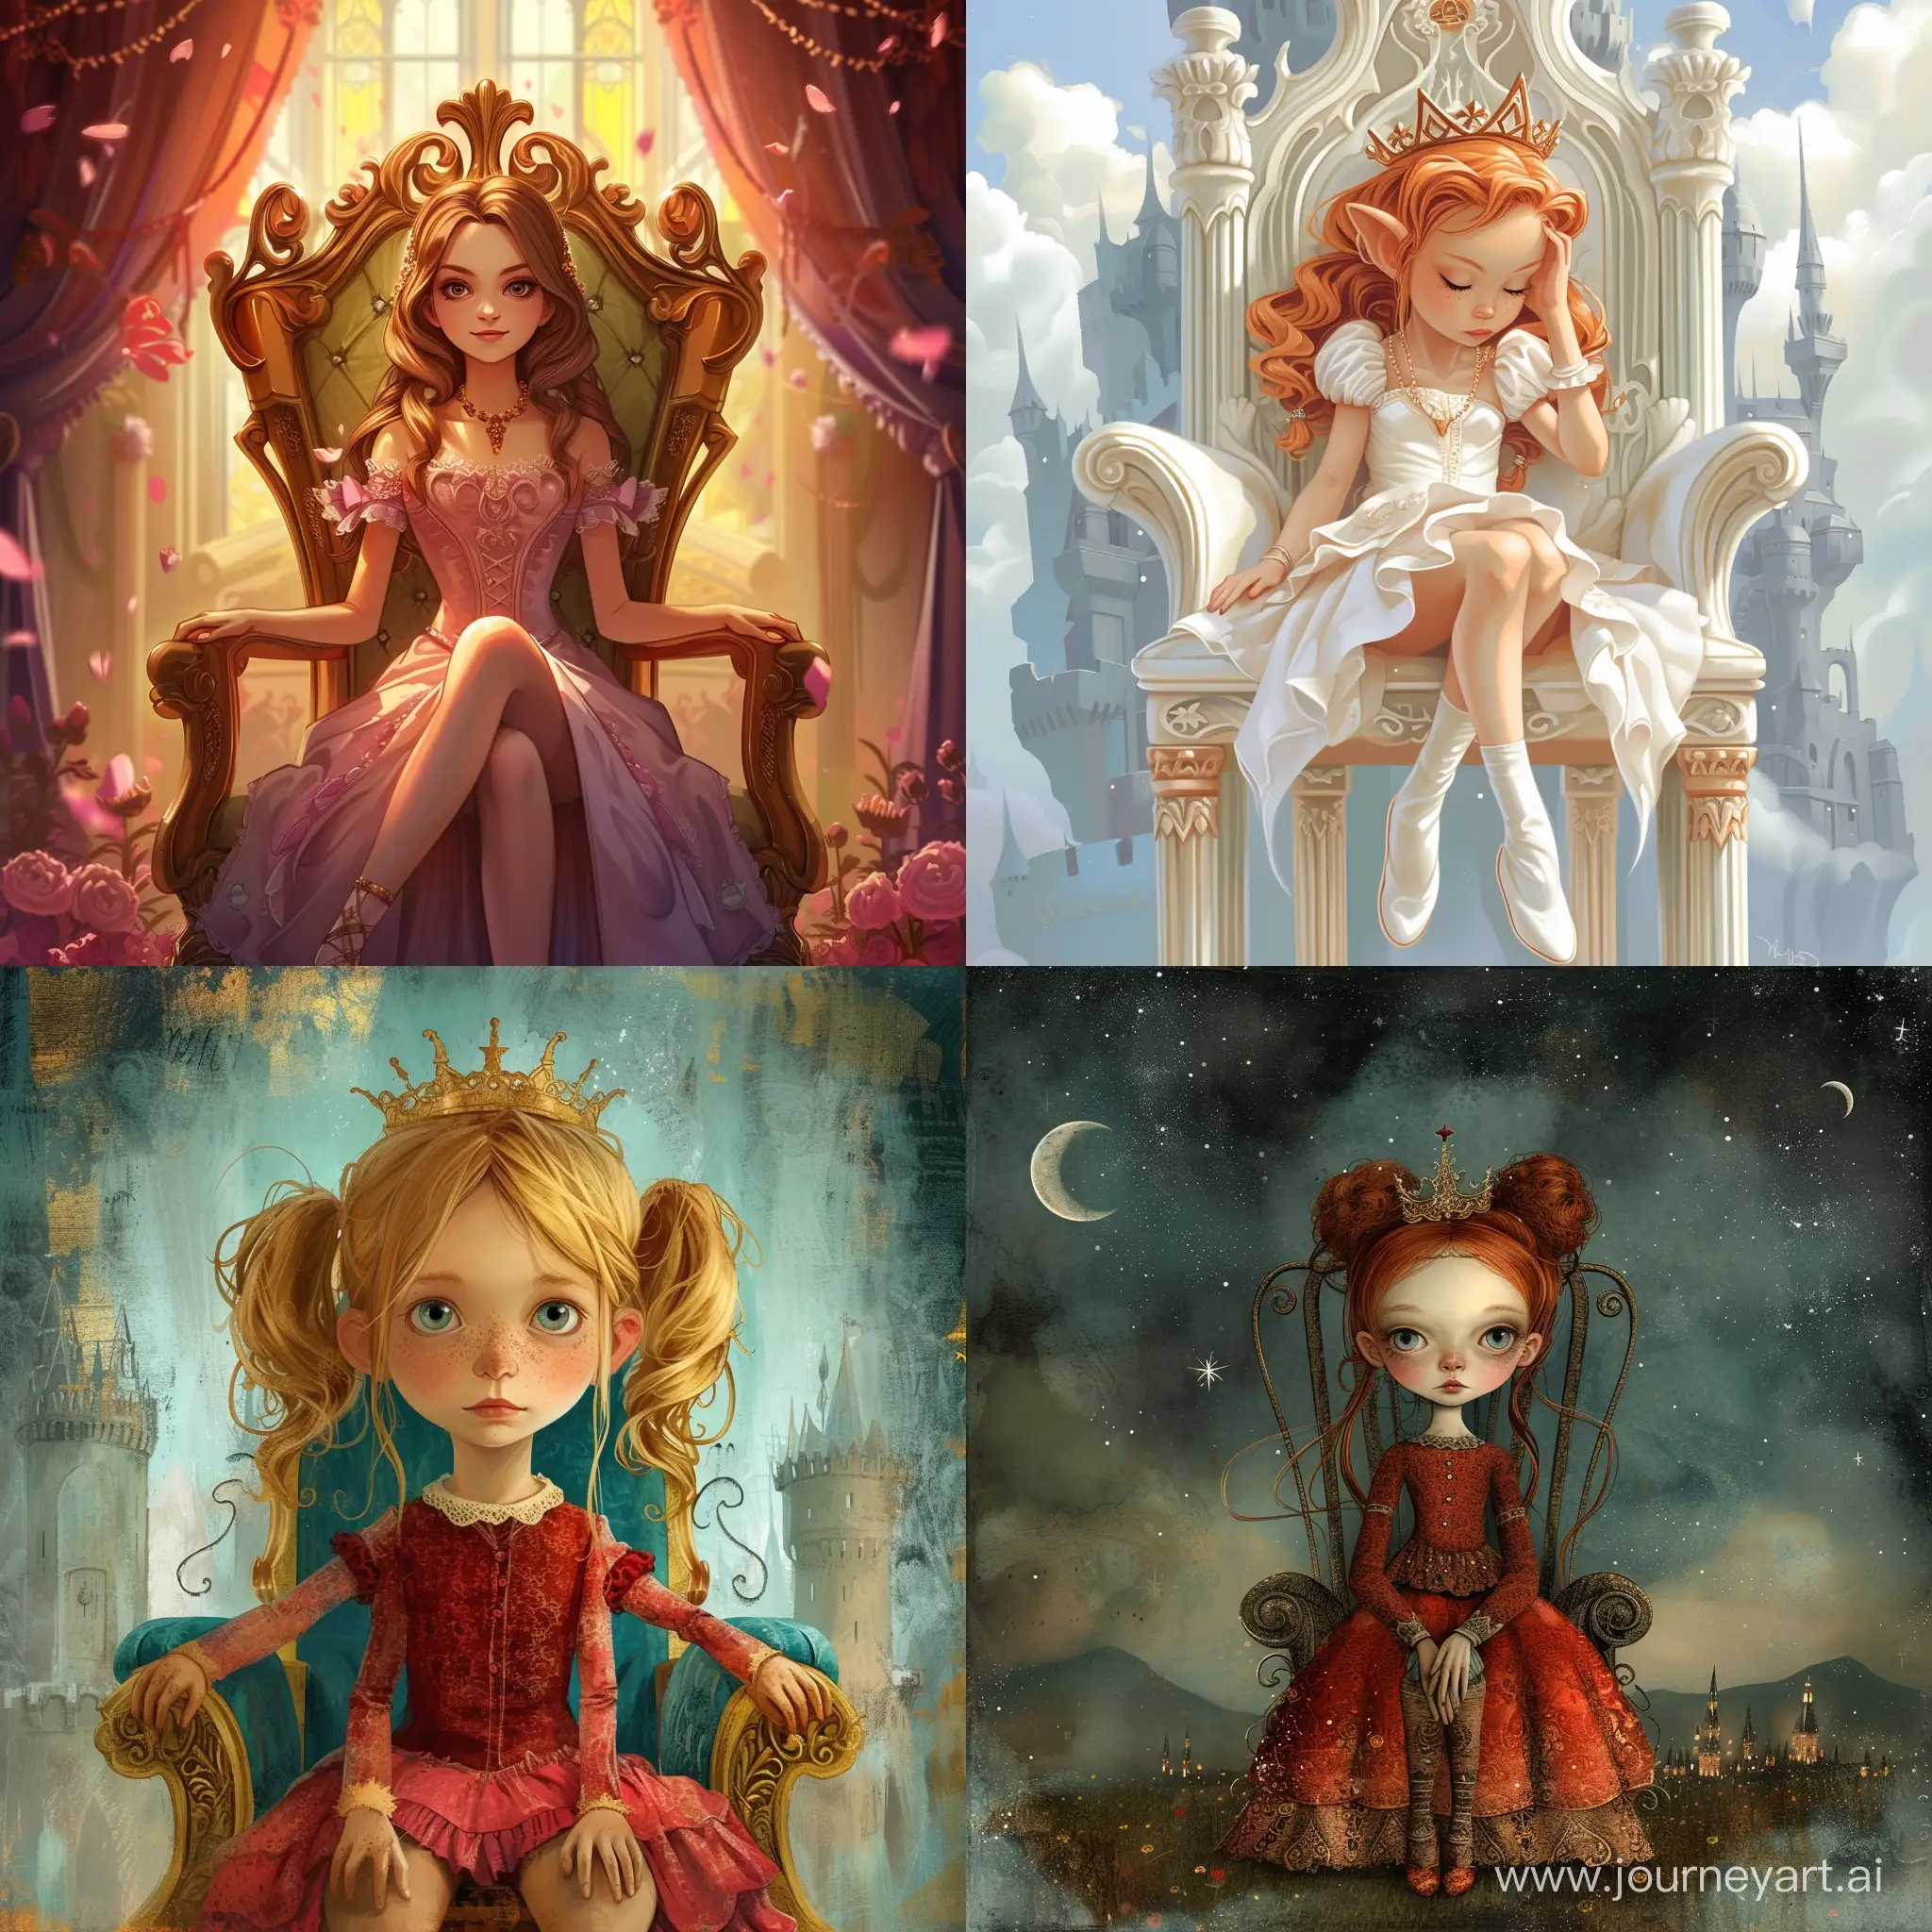 a girl,princess,sit throne